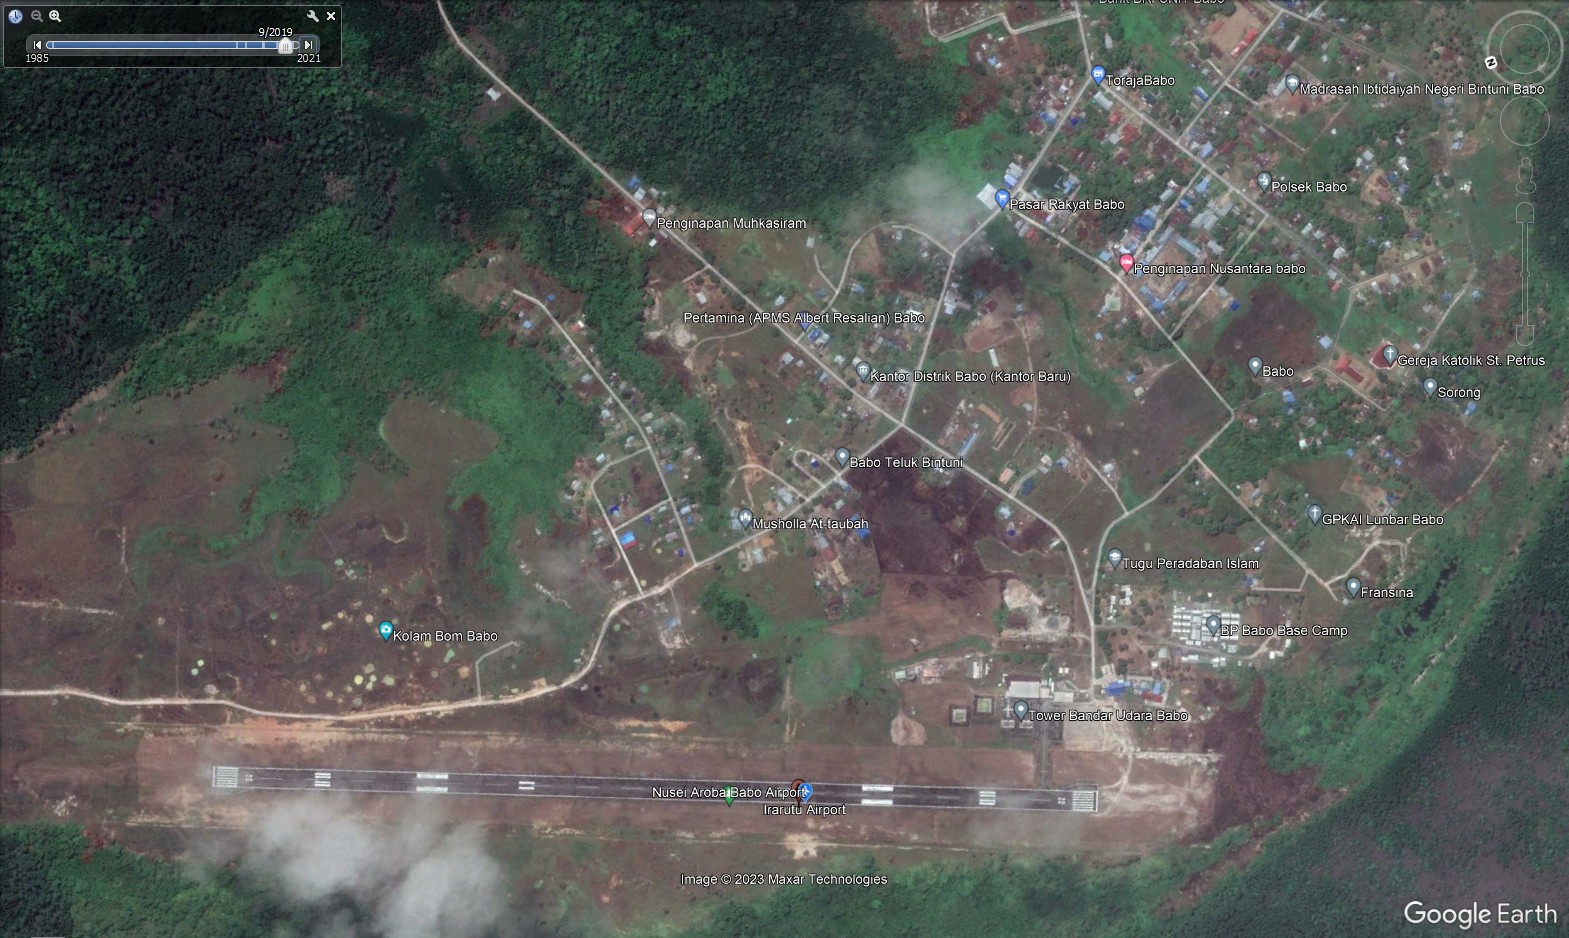 Gambar Peta Bandara Citra Satelit Bandar Udara Babo